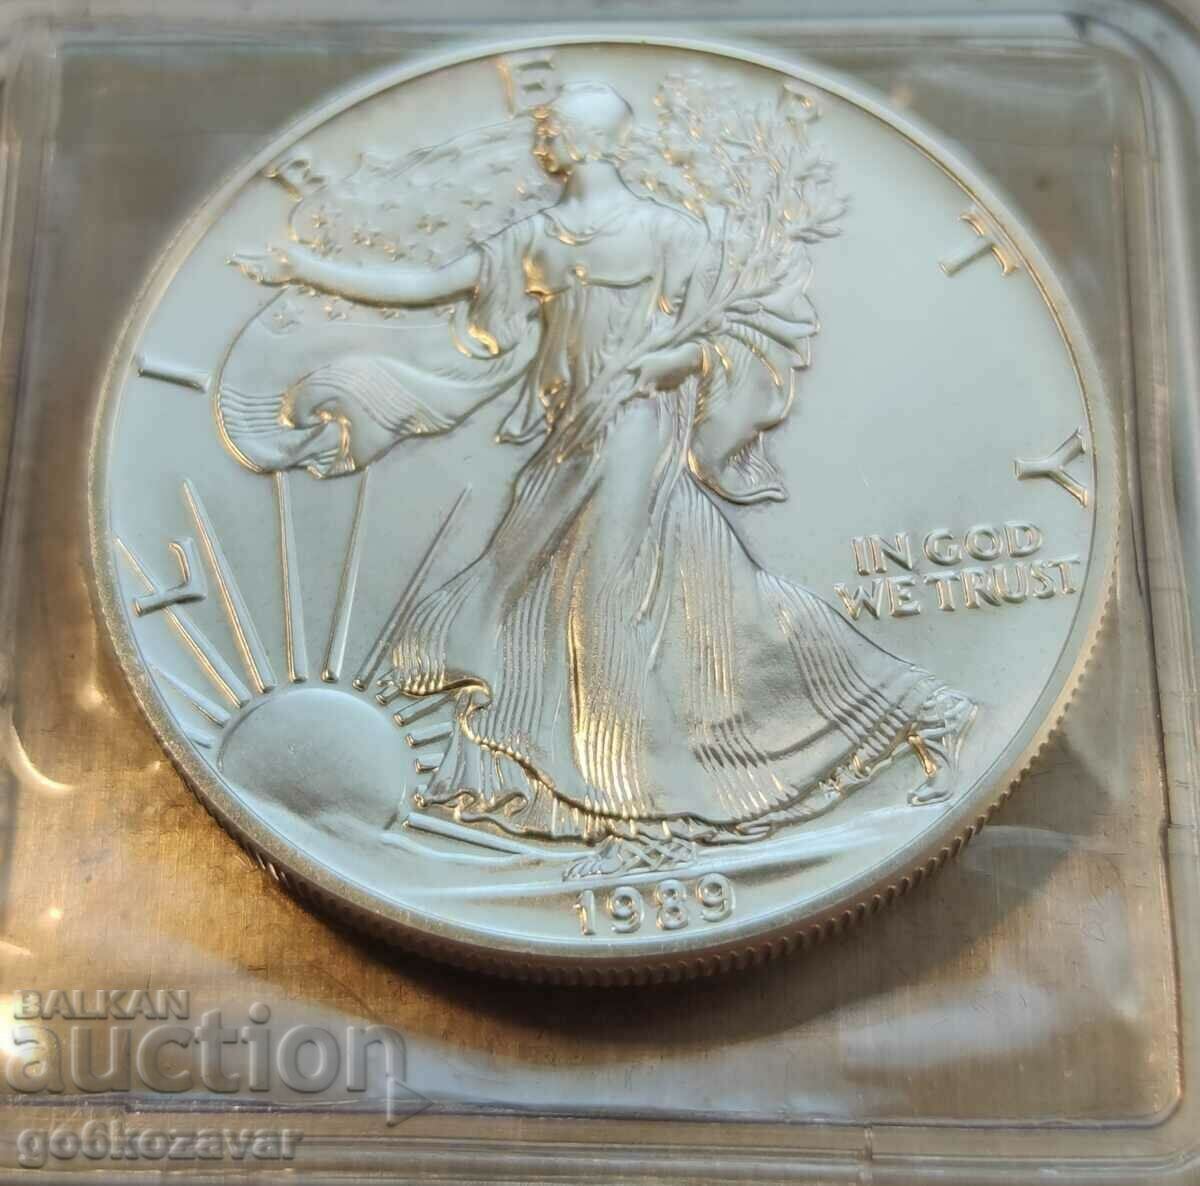 American Eagle 1 oz argint 9,999 uncie 1989 UNC Proof